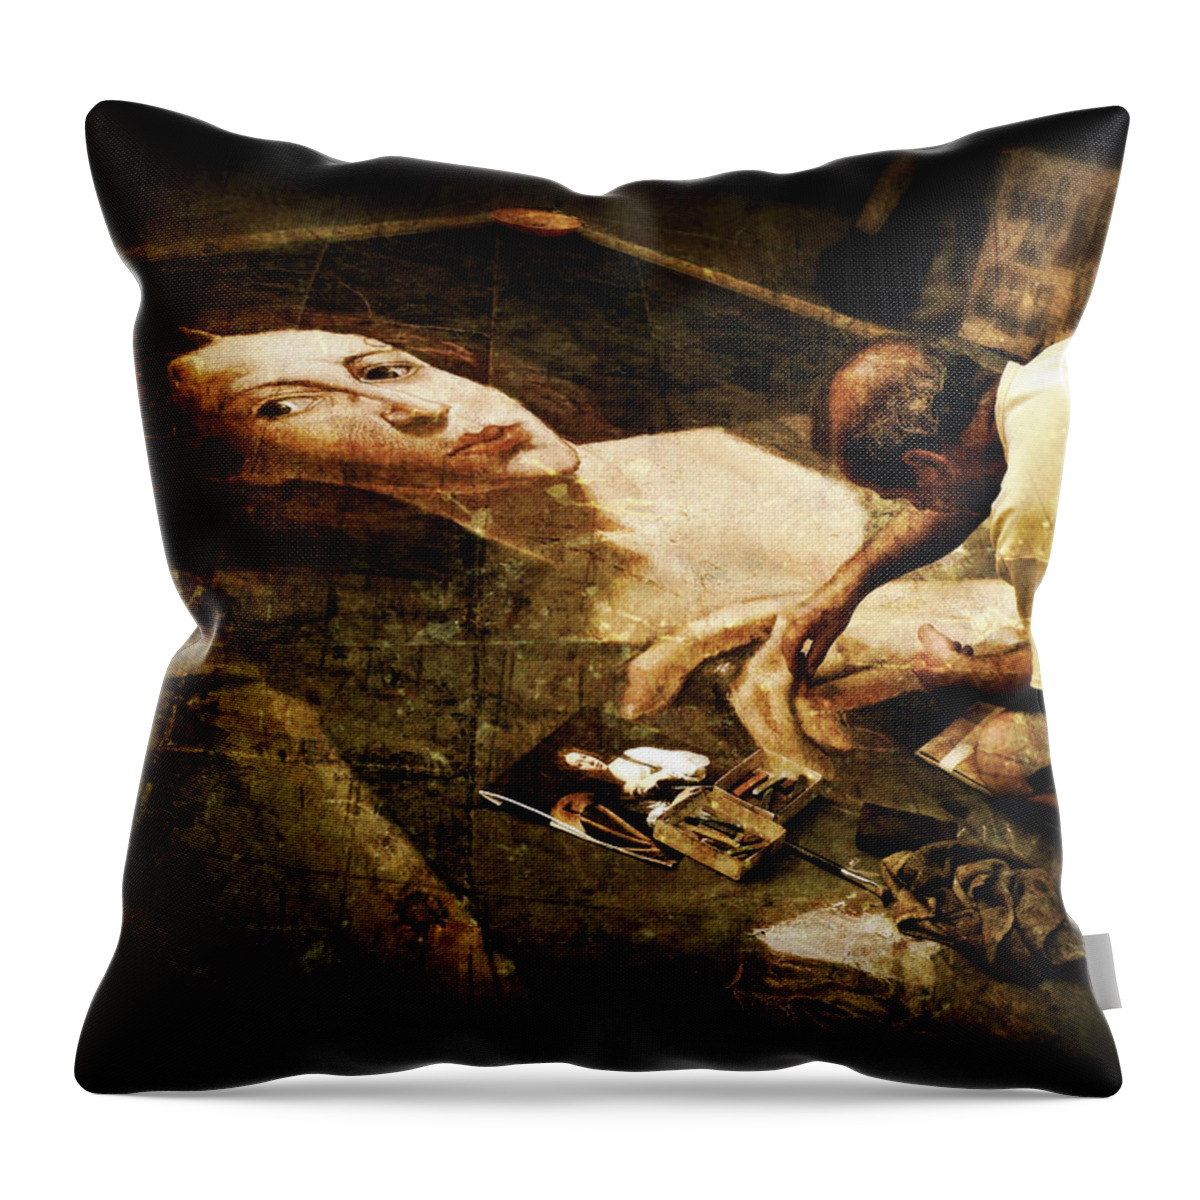 Florence Throw Pillow featuring the photograph L'Artista di Strada by Micki Findlay